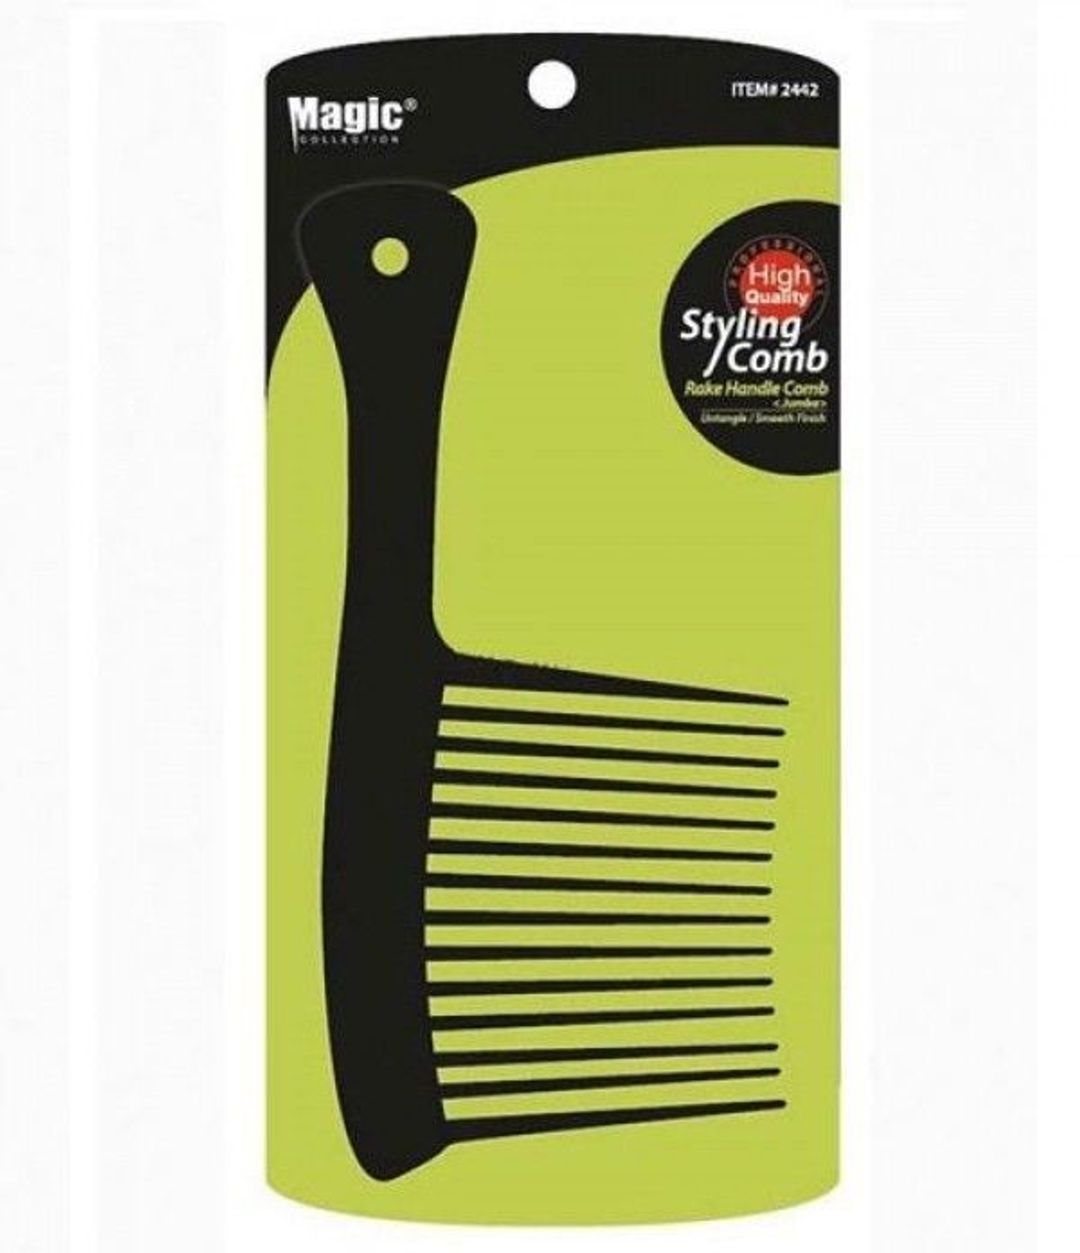 Magic Collection Jumbo Rake Handle Comb - 2442